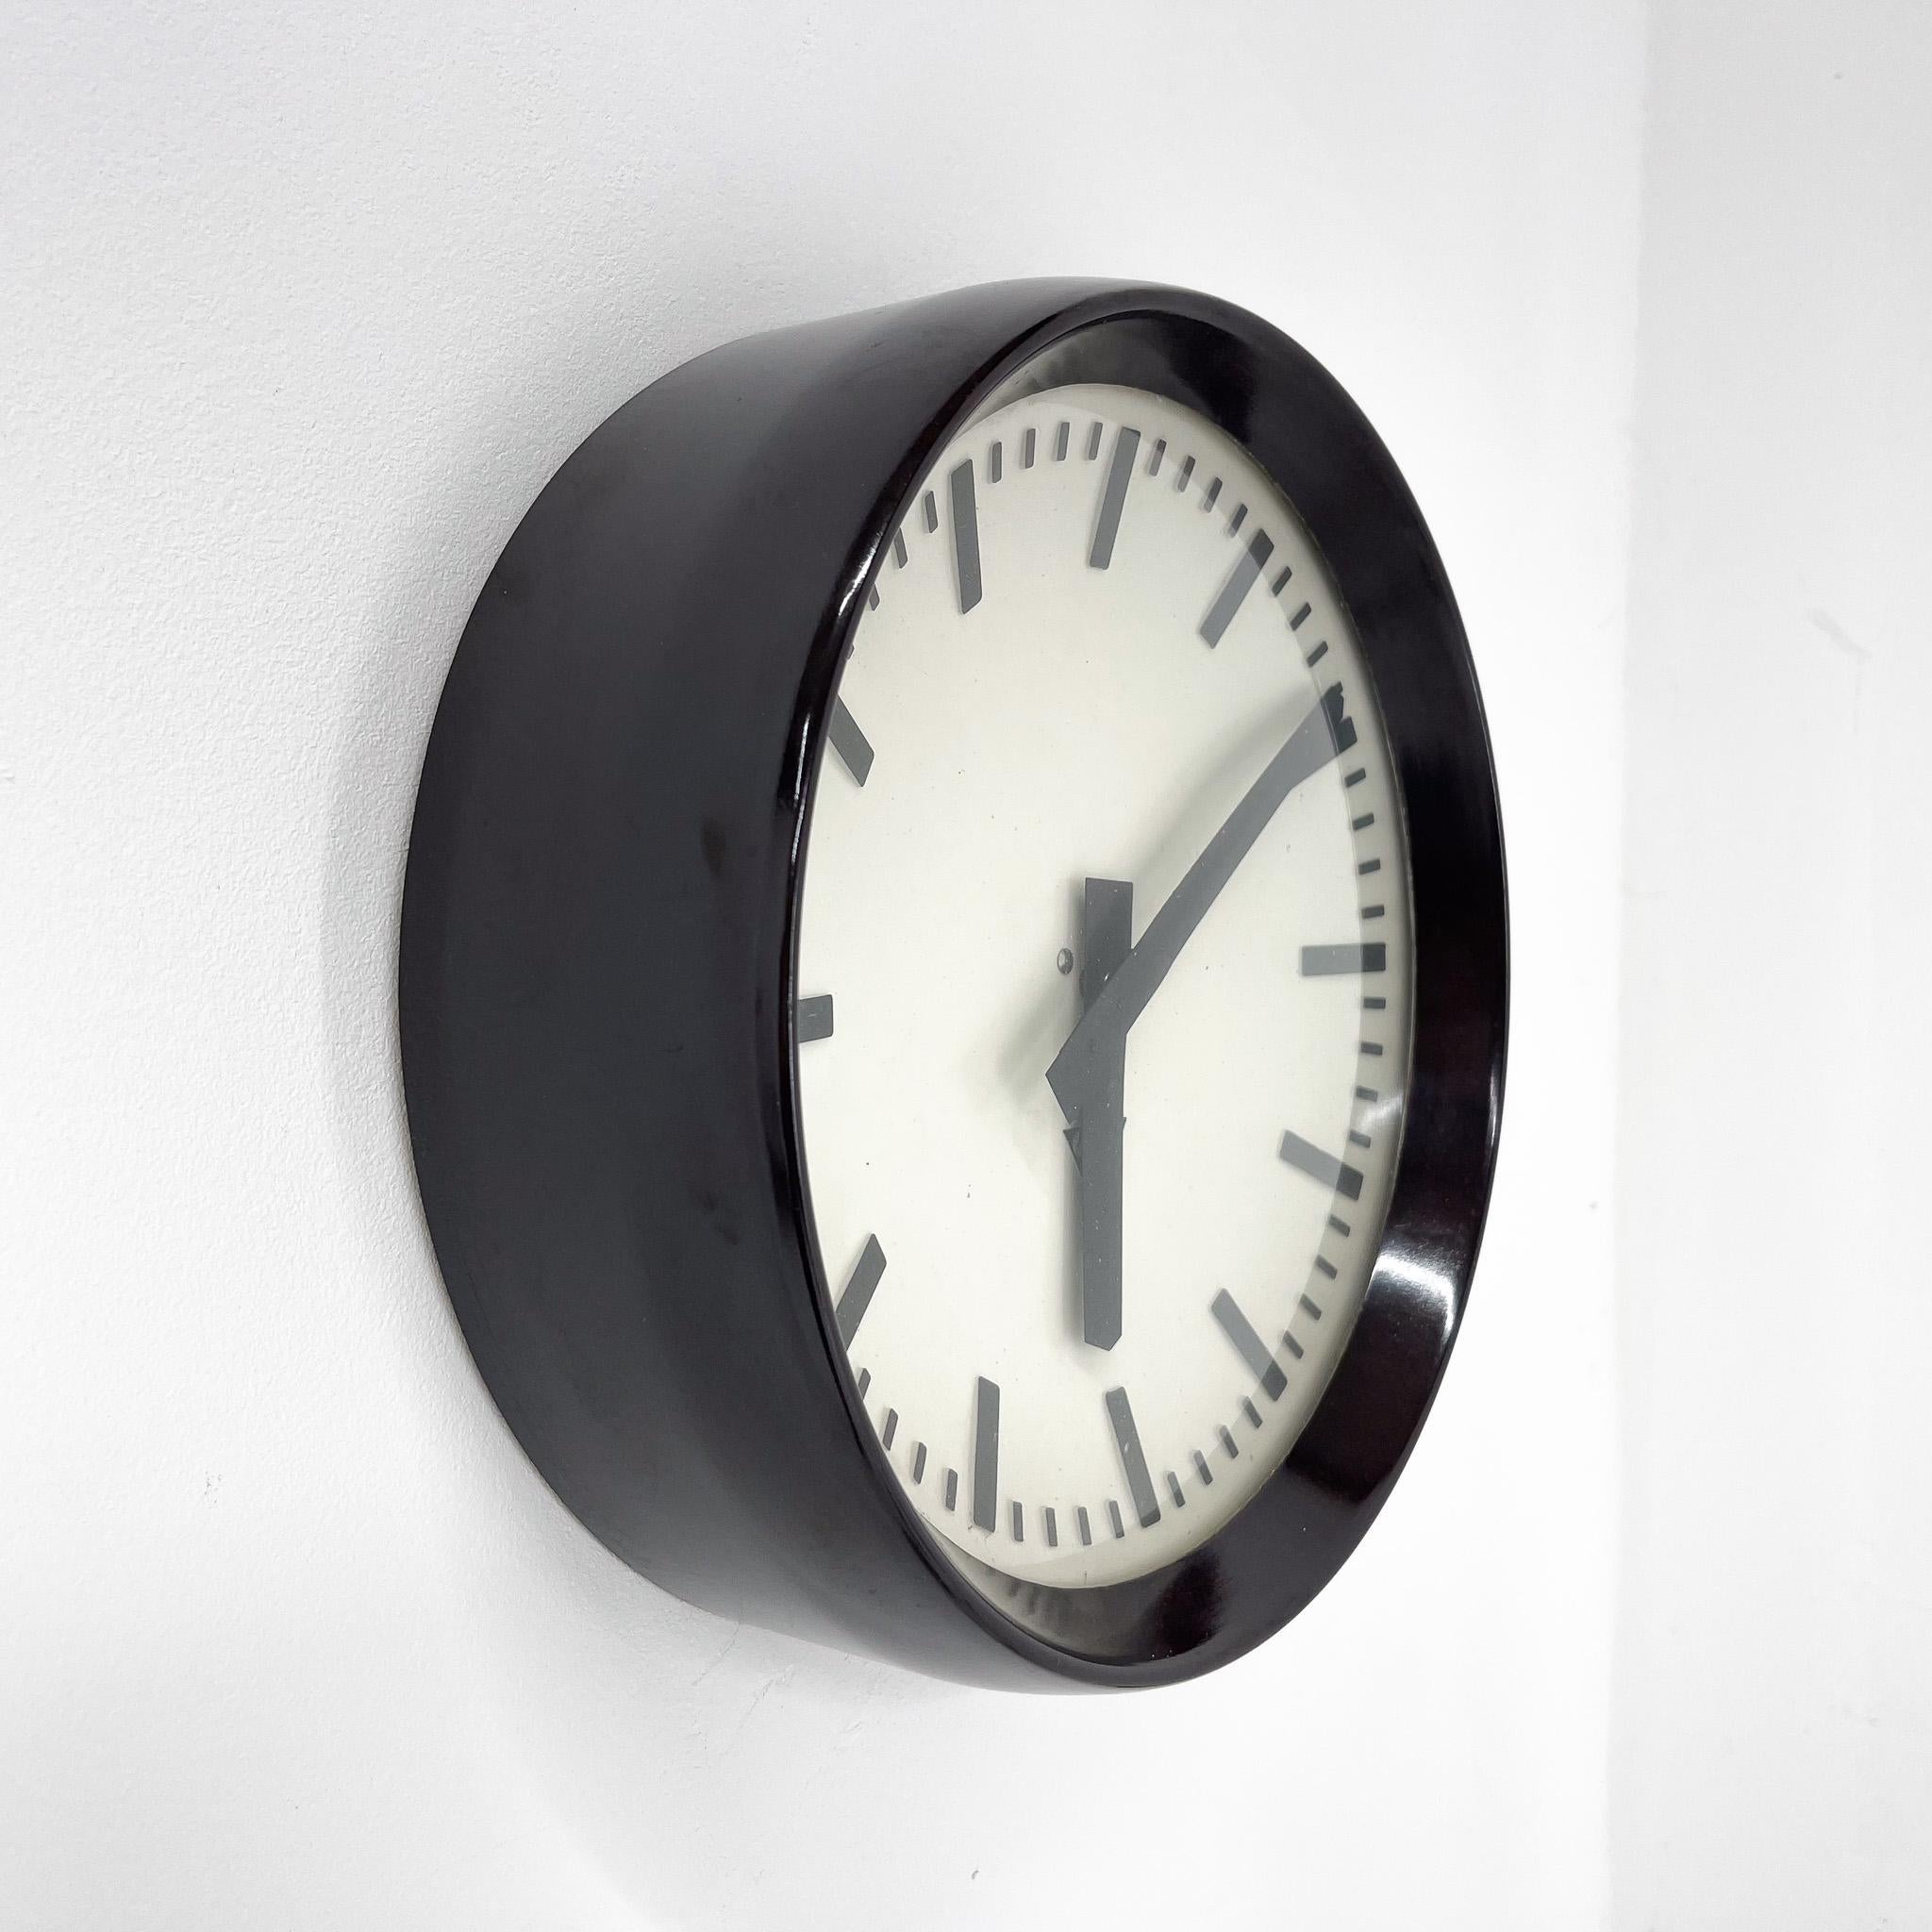 Mid-Century Modern Bakelite Industrial Wall Clock by Pragotron, 1960s For Sale